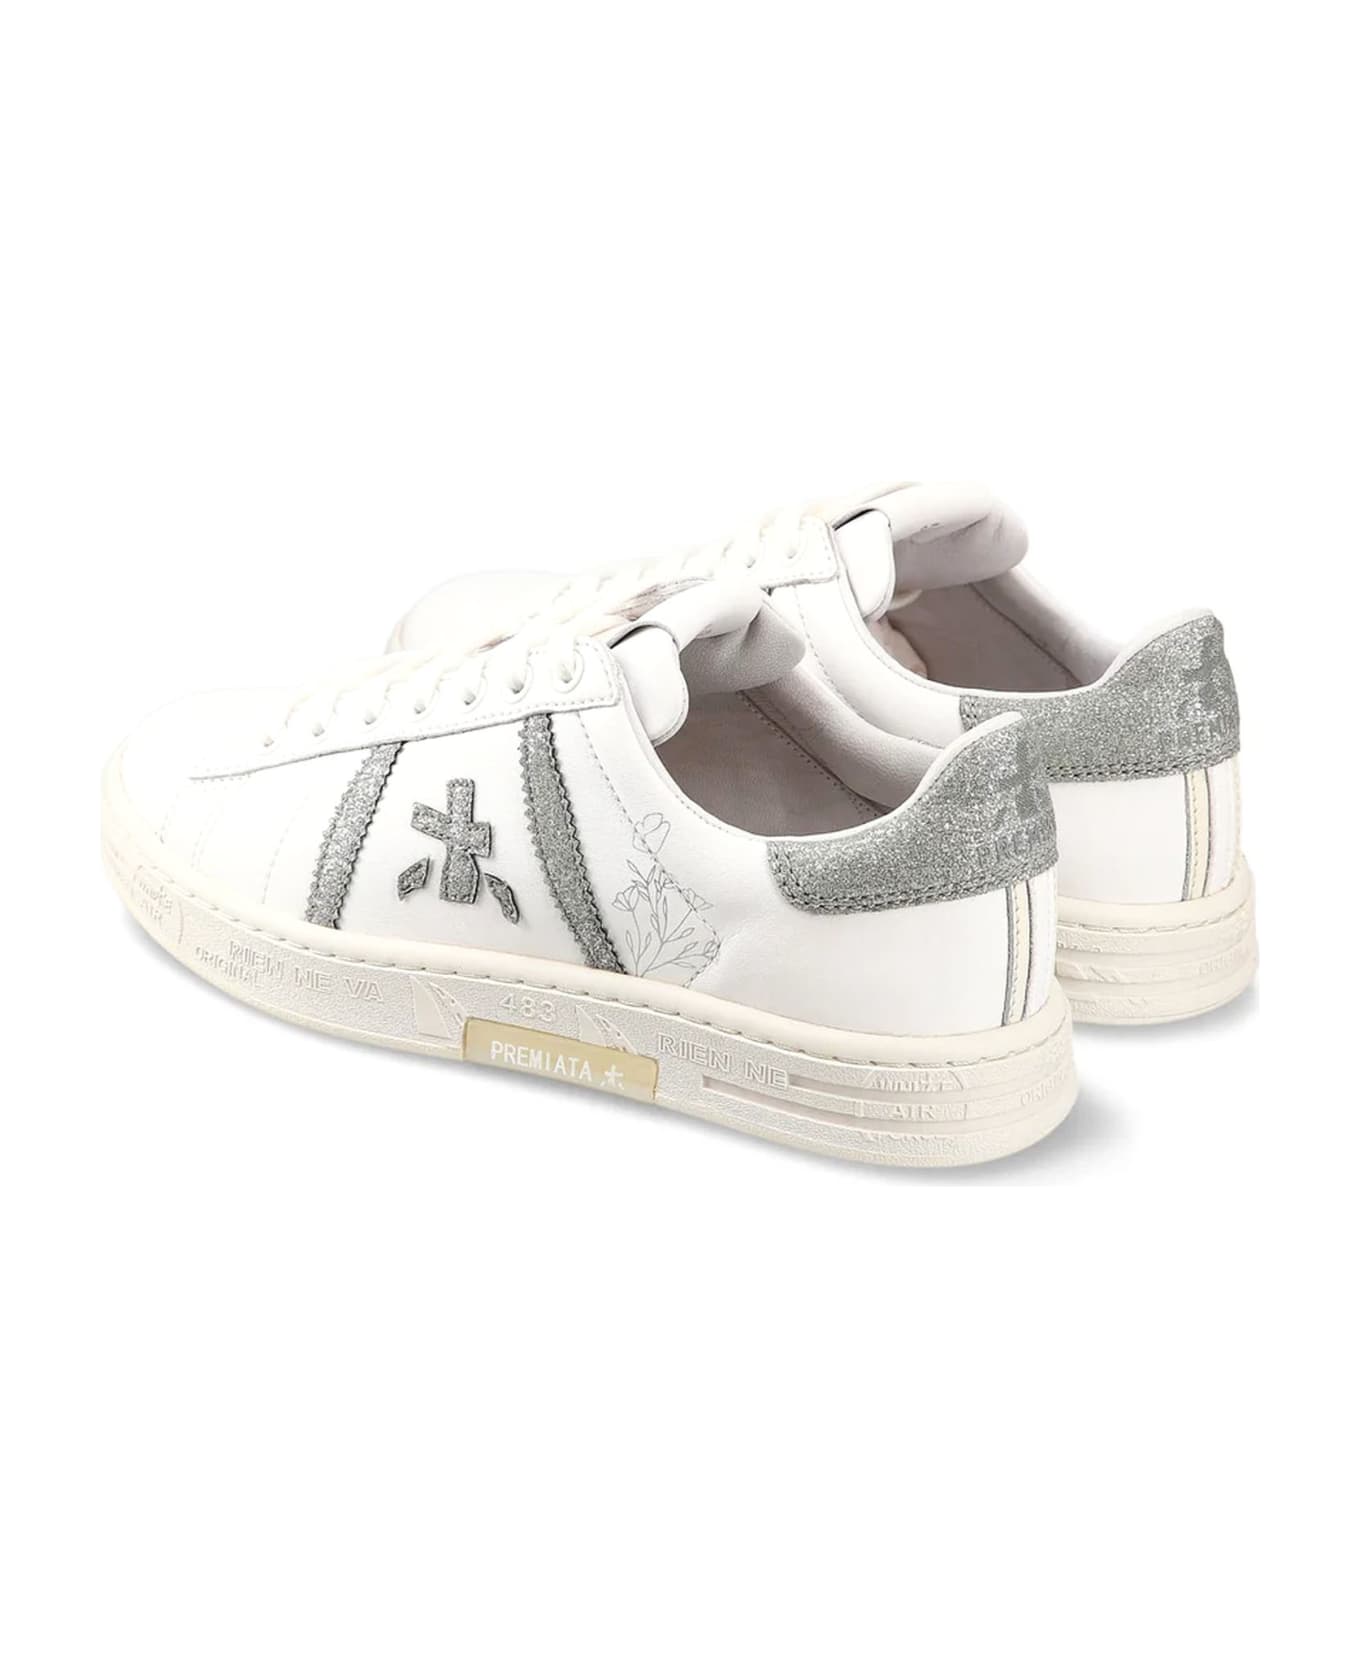 Premiata White Calf Leather Russell Sneakers - White